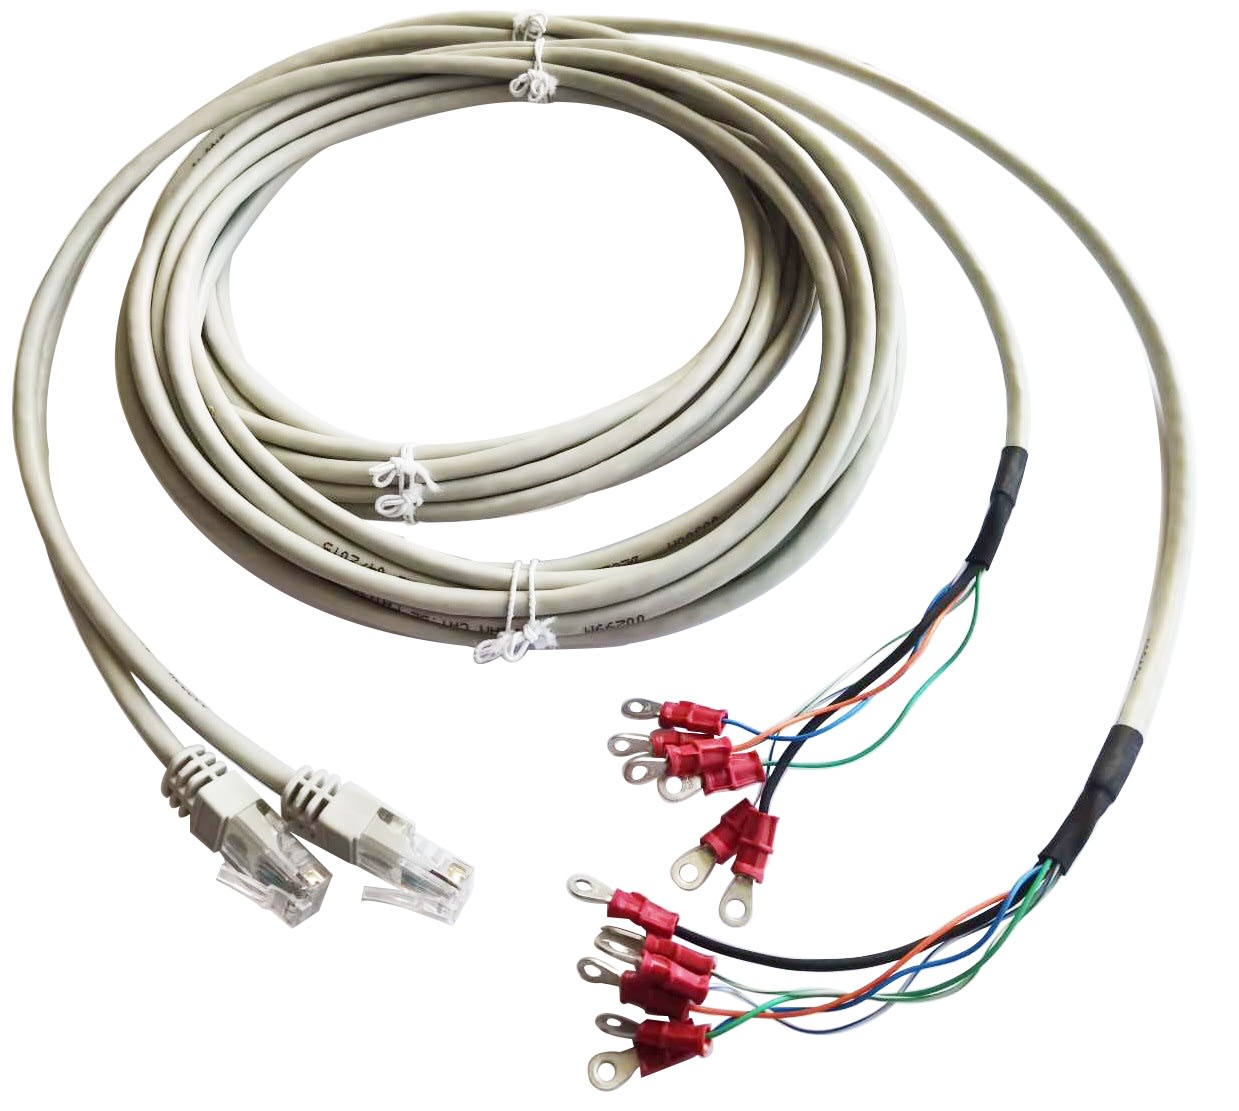 Decelect Forgos - Cables pour 10 contact secs - 15 feet